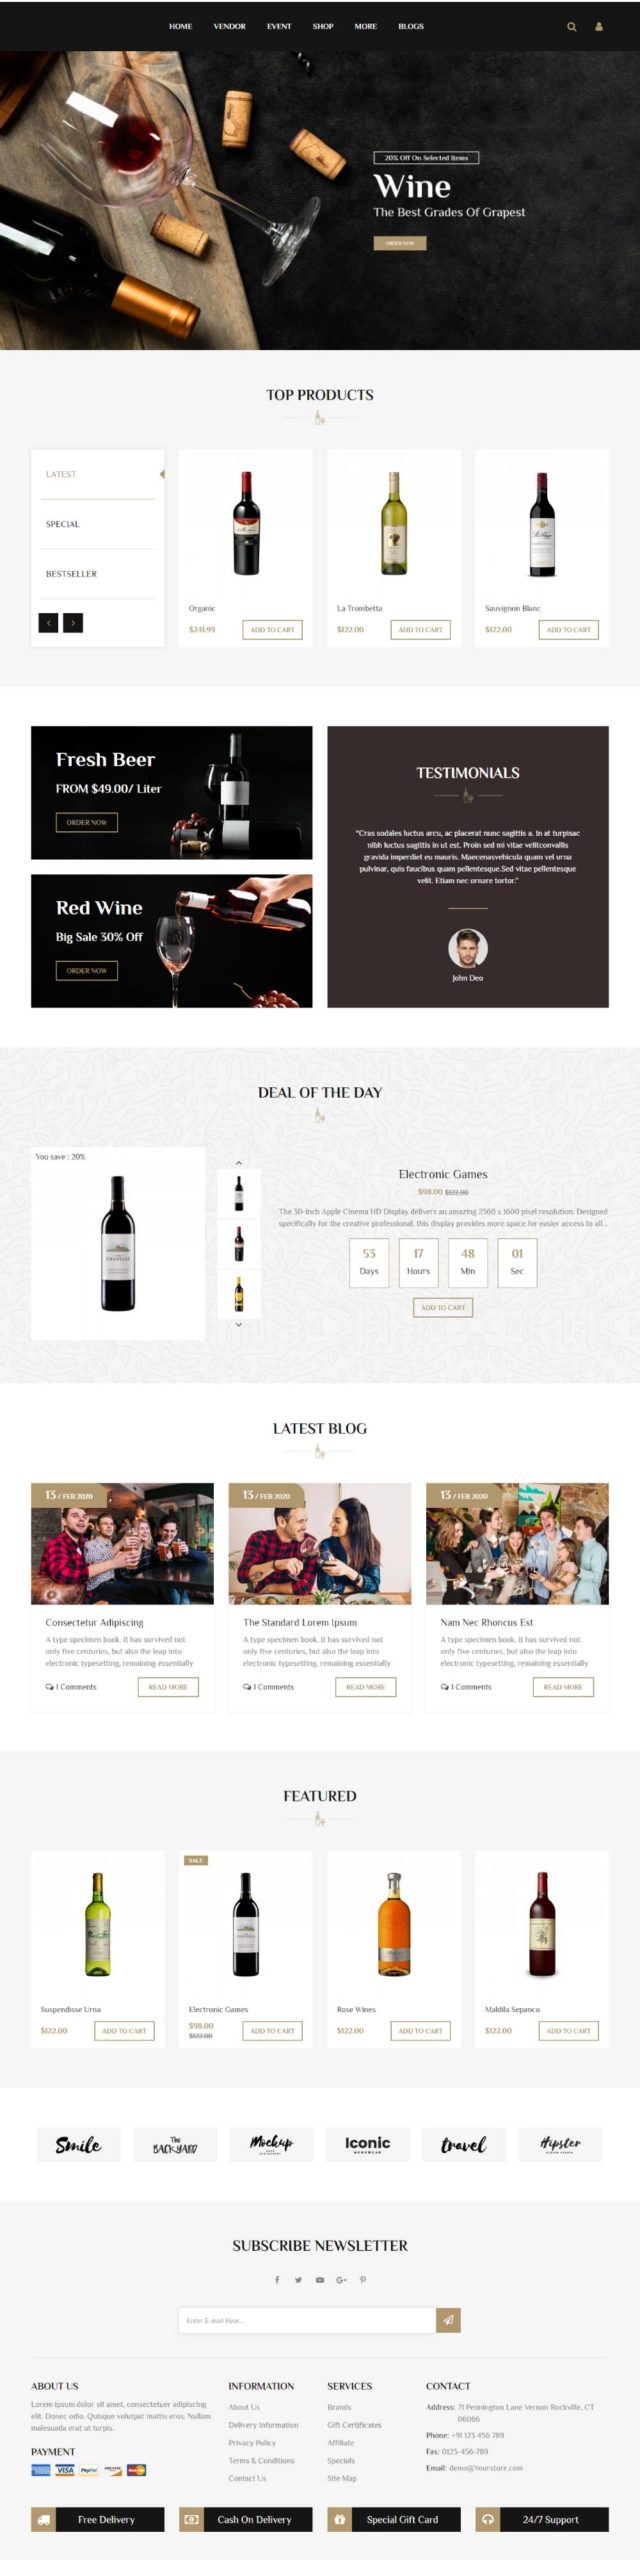 wine website design